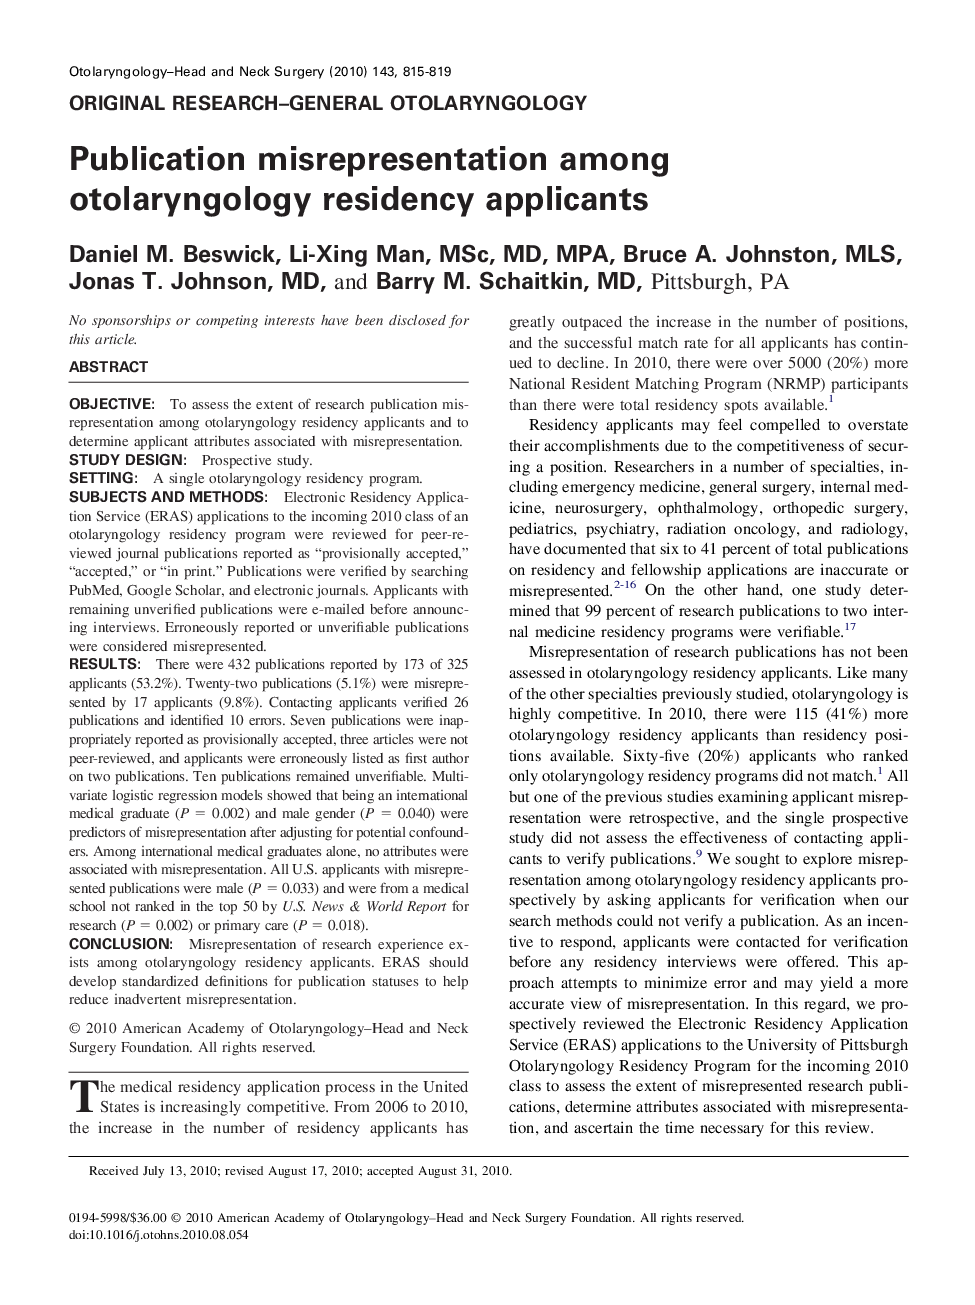 Publication misrepresentation among otolaryngology residency applicants